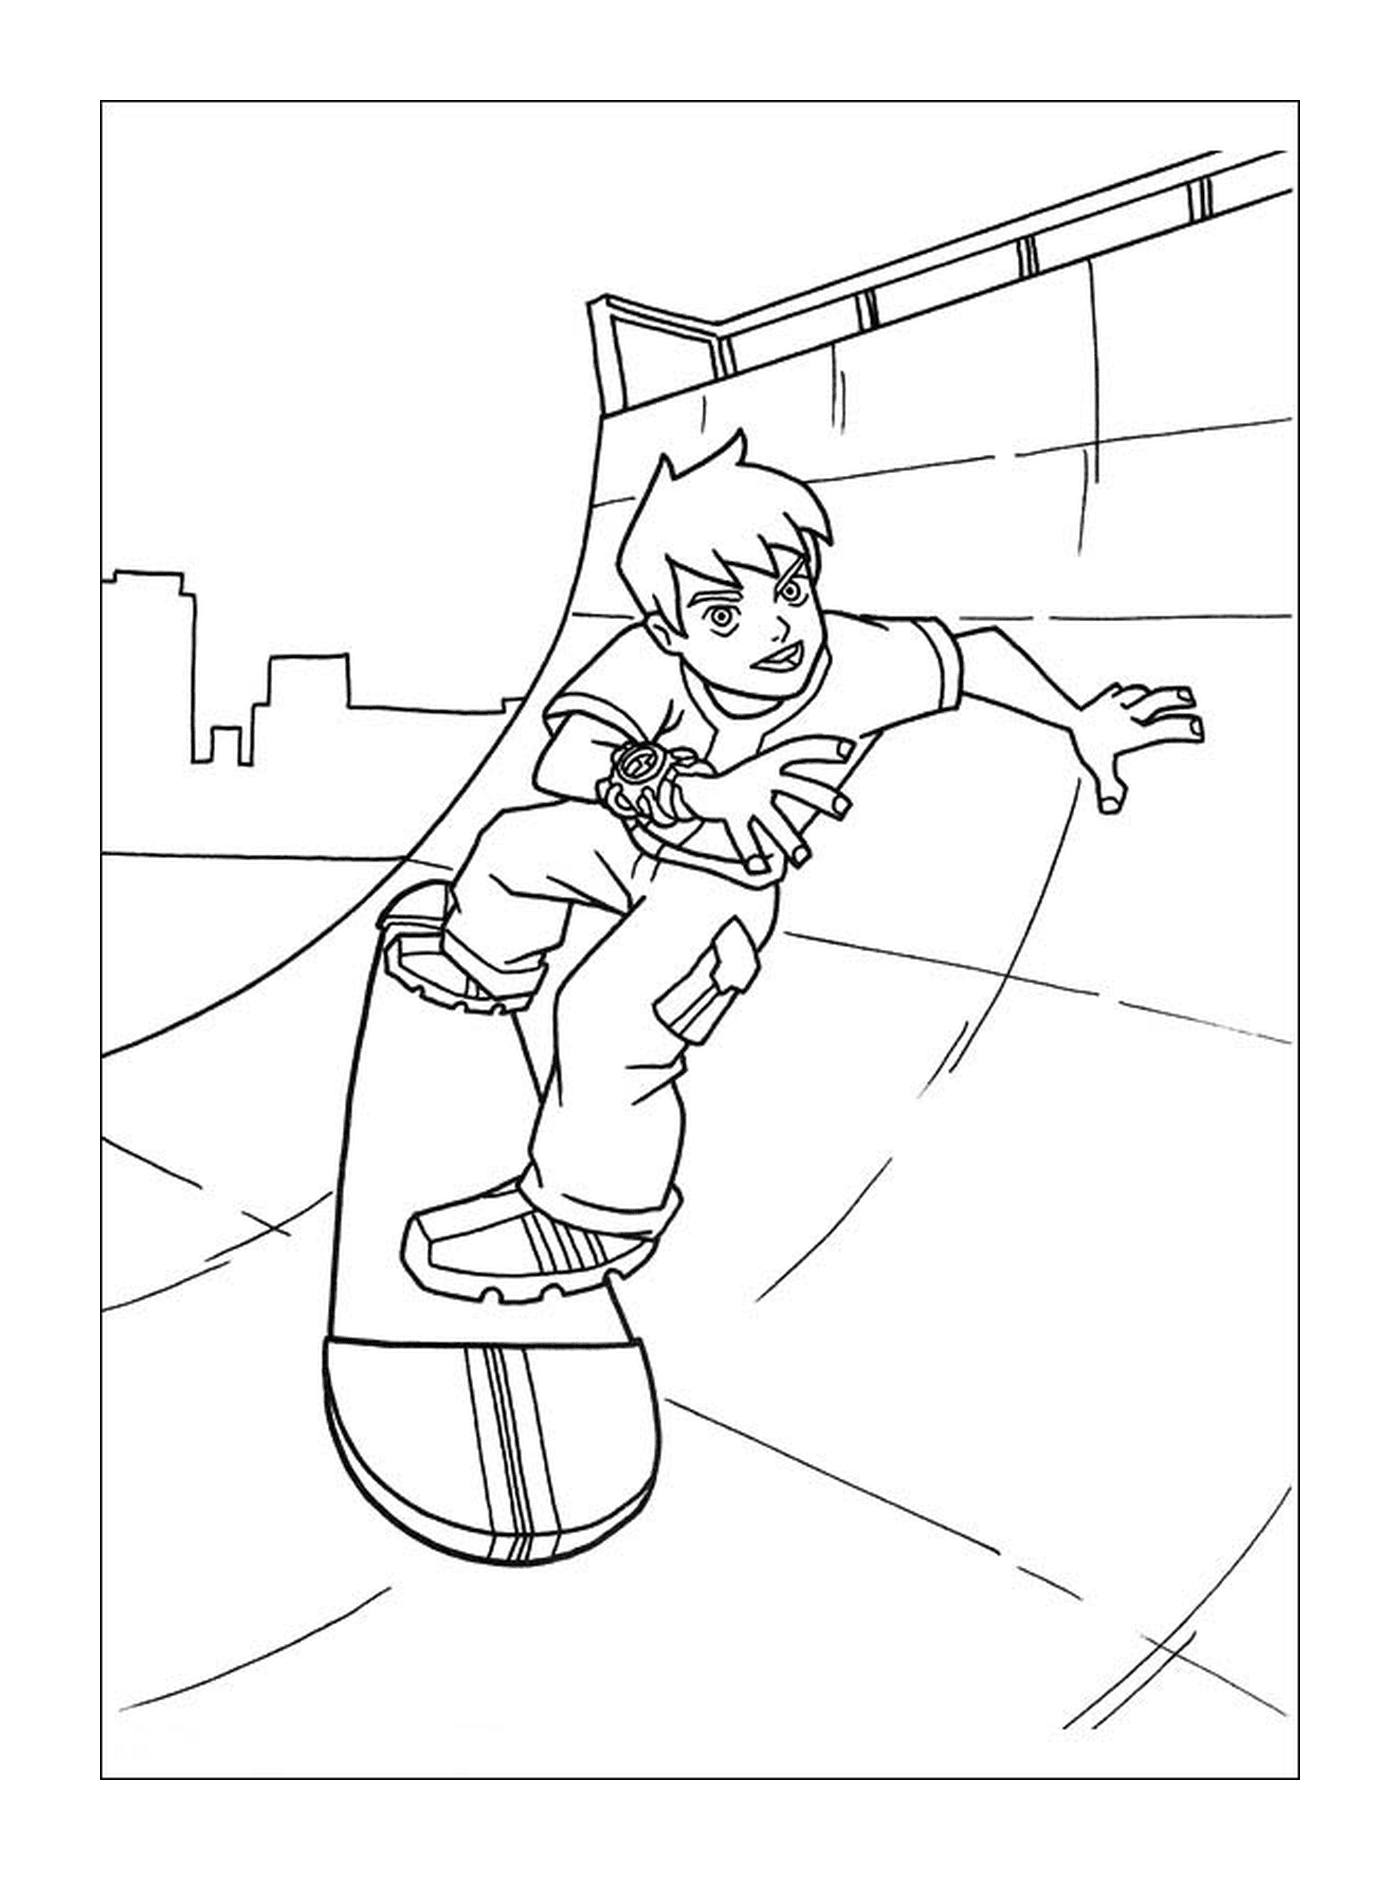  A boy on a skateboard 